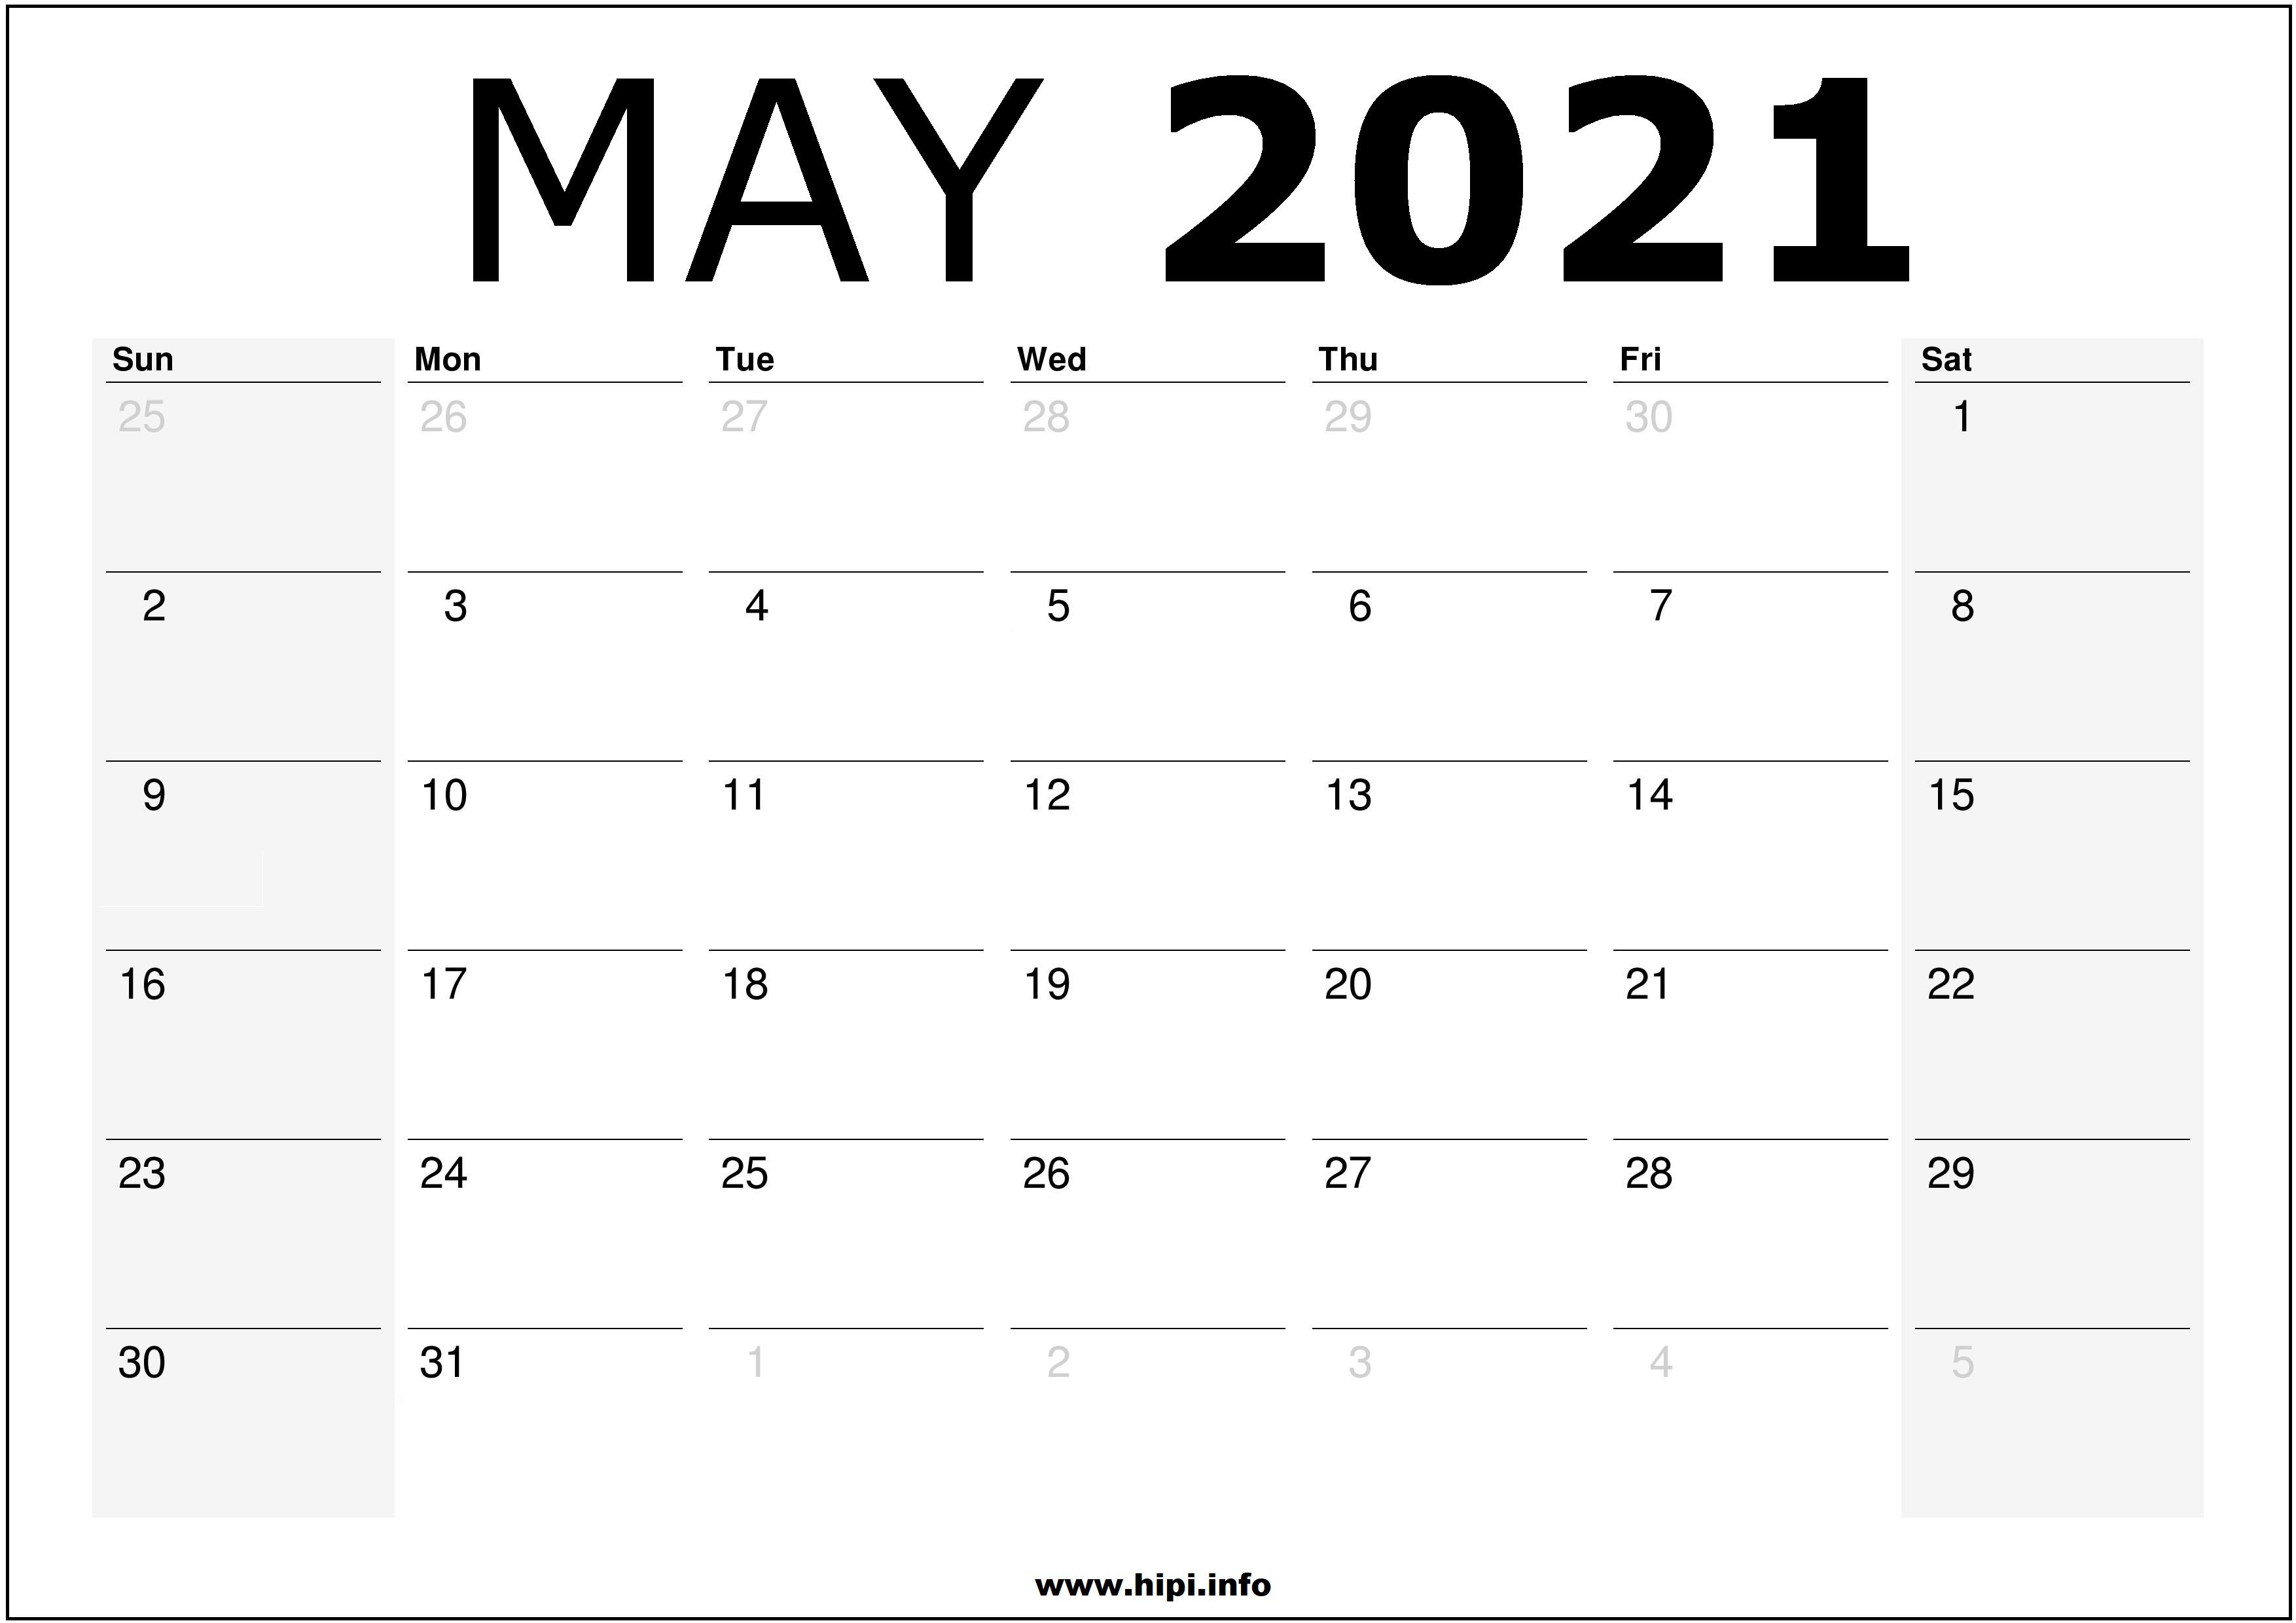 Календарь на май 2021. Май 2021. Календарь 2021. Календарь май 2021. Календарь на май 2021 пустой.